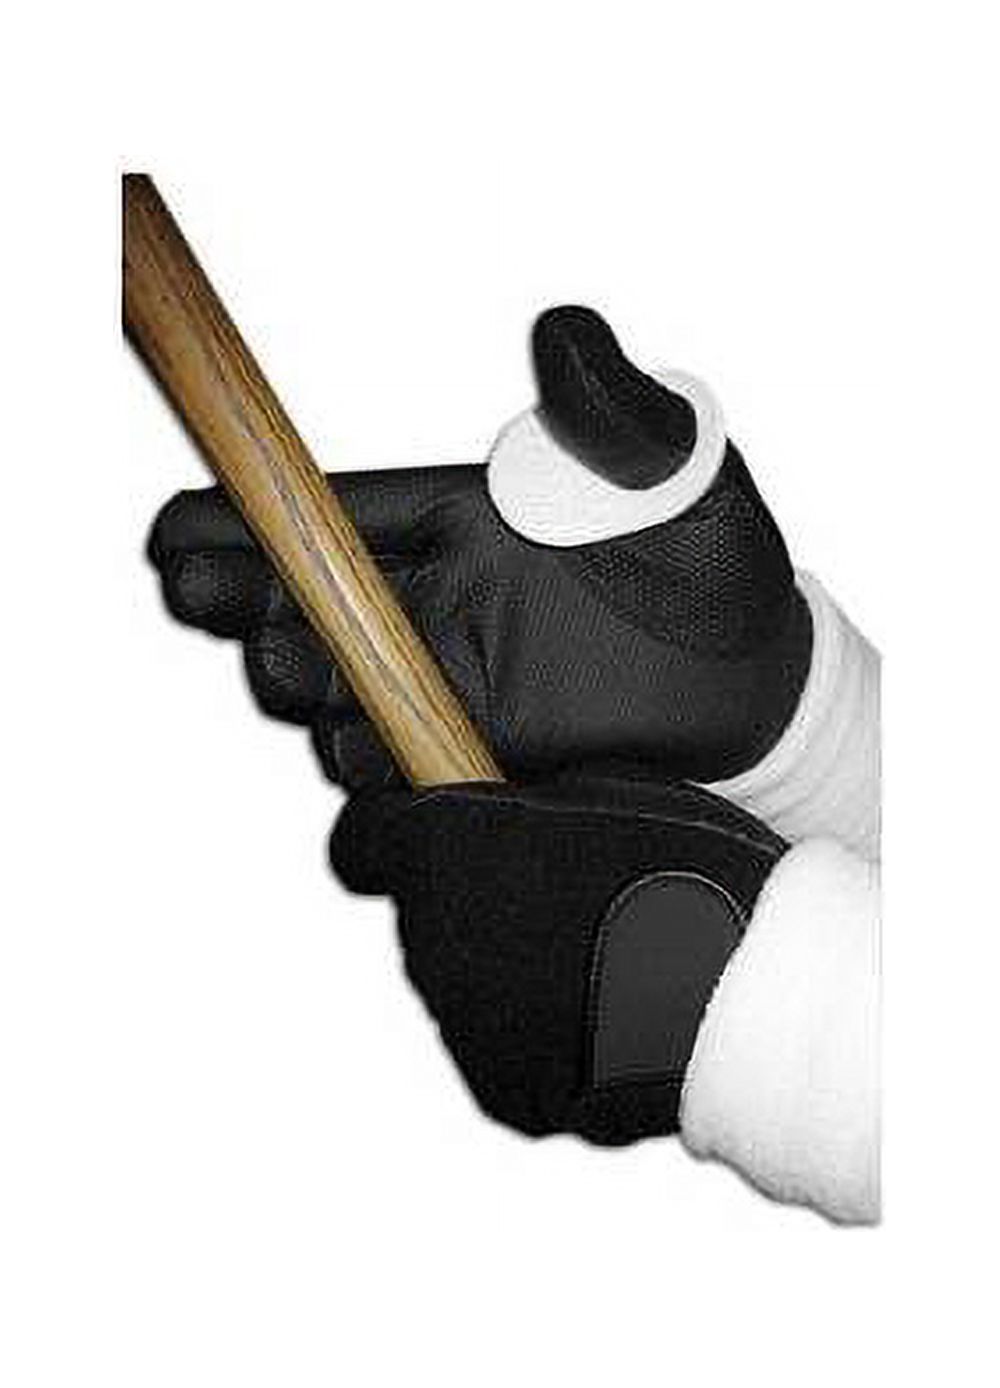 Batting Aid (Black) - image 1 of 2